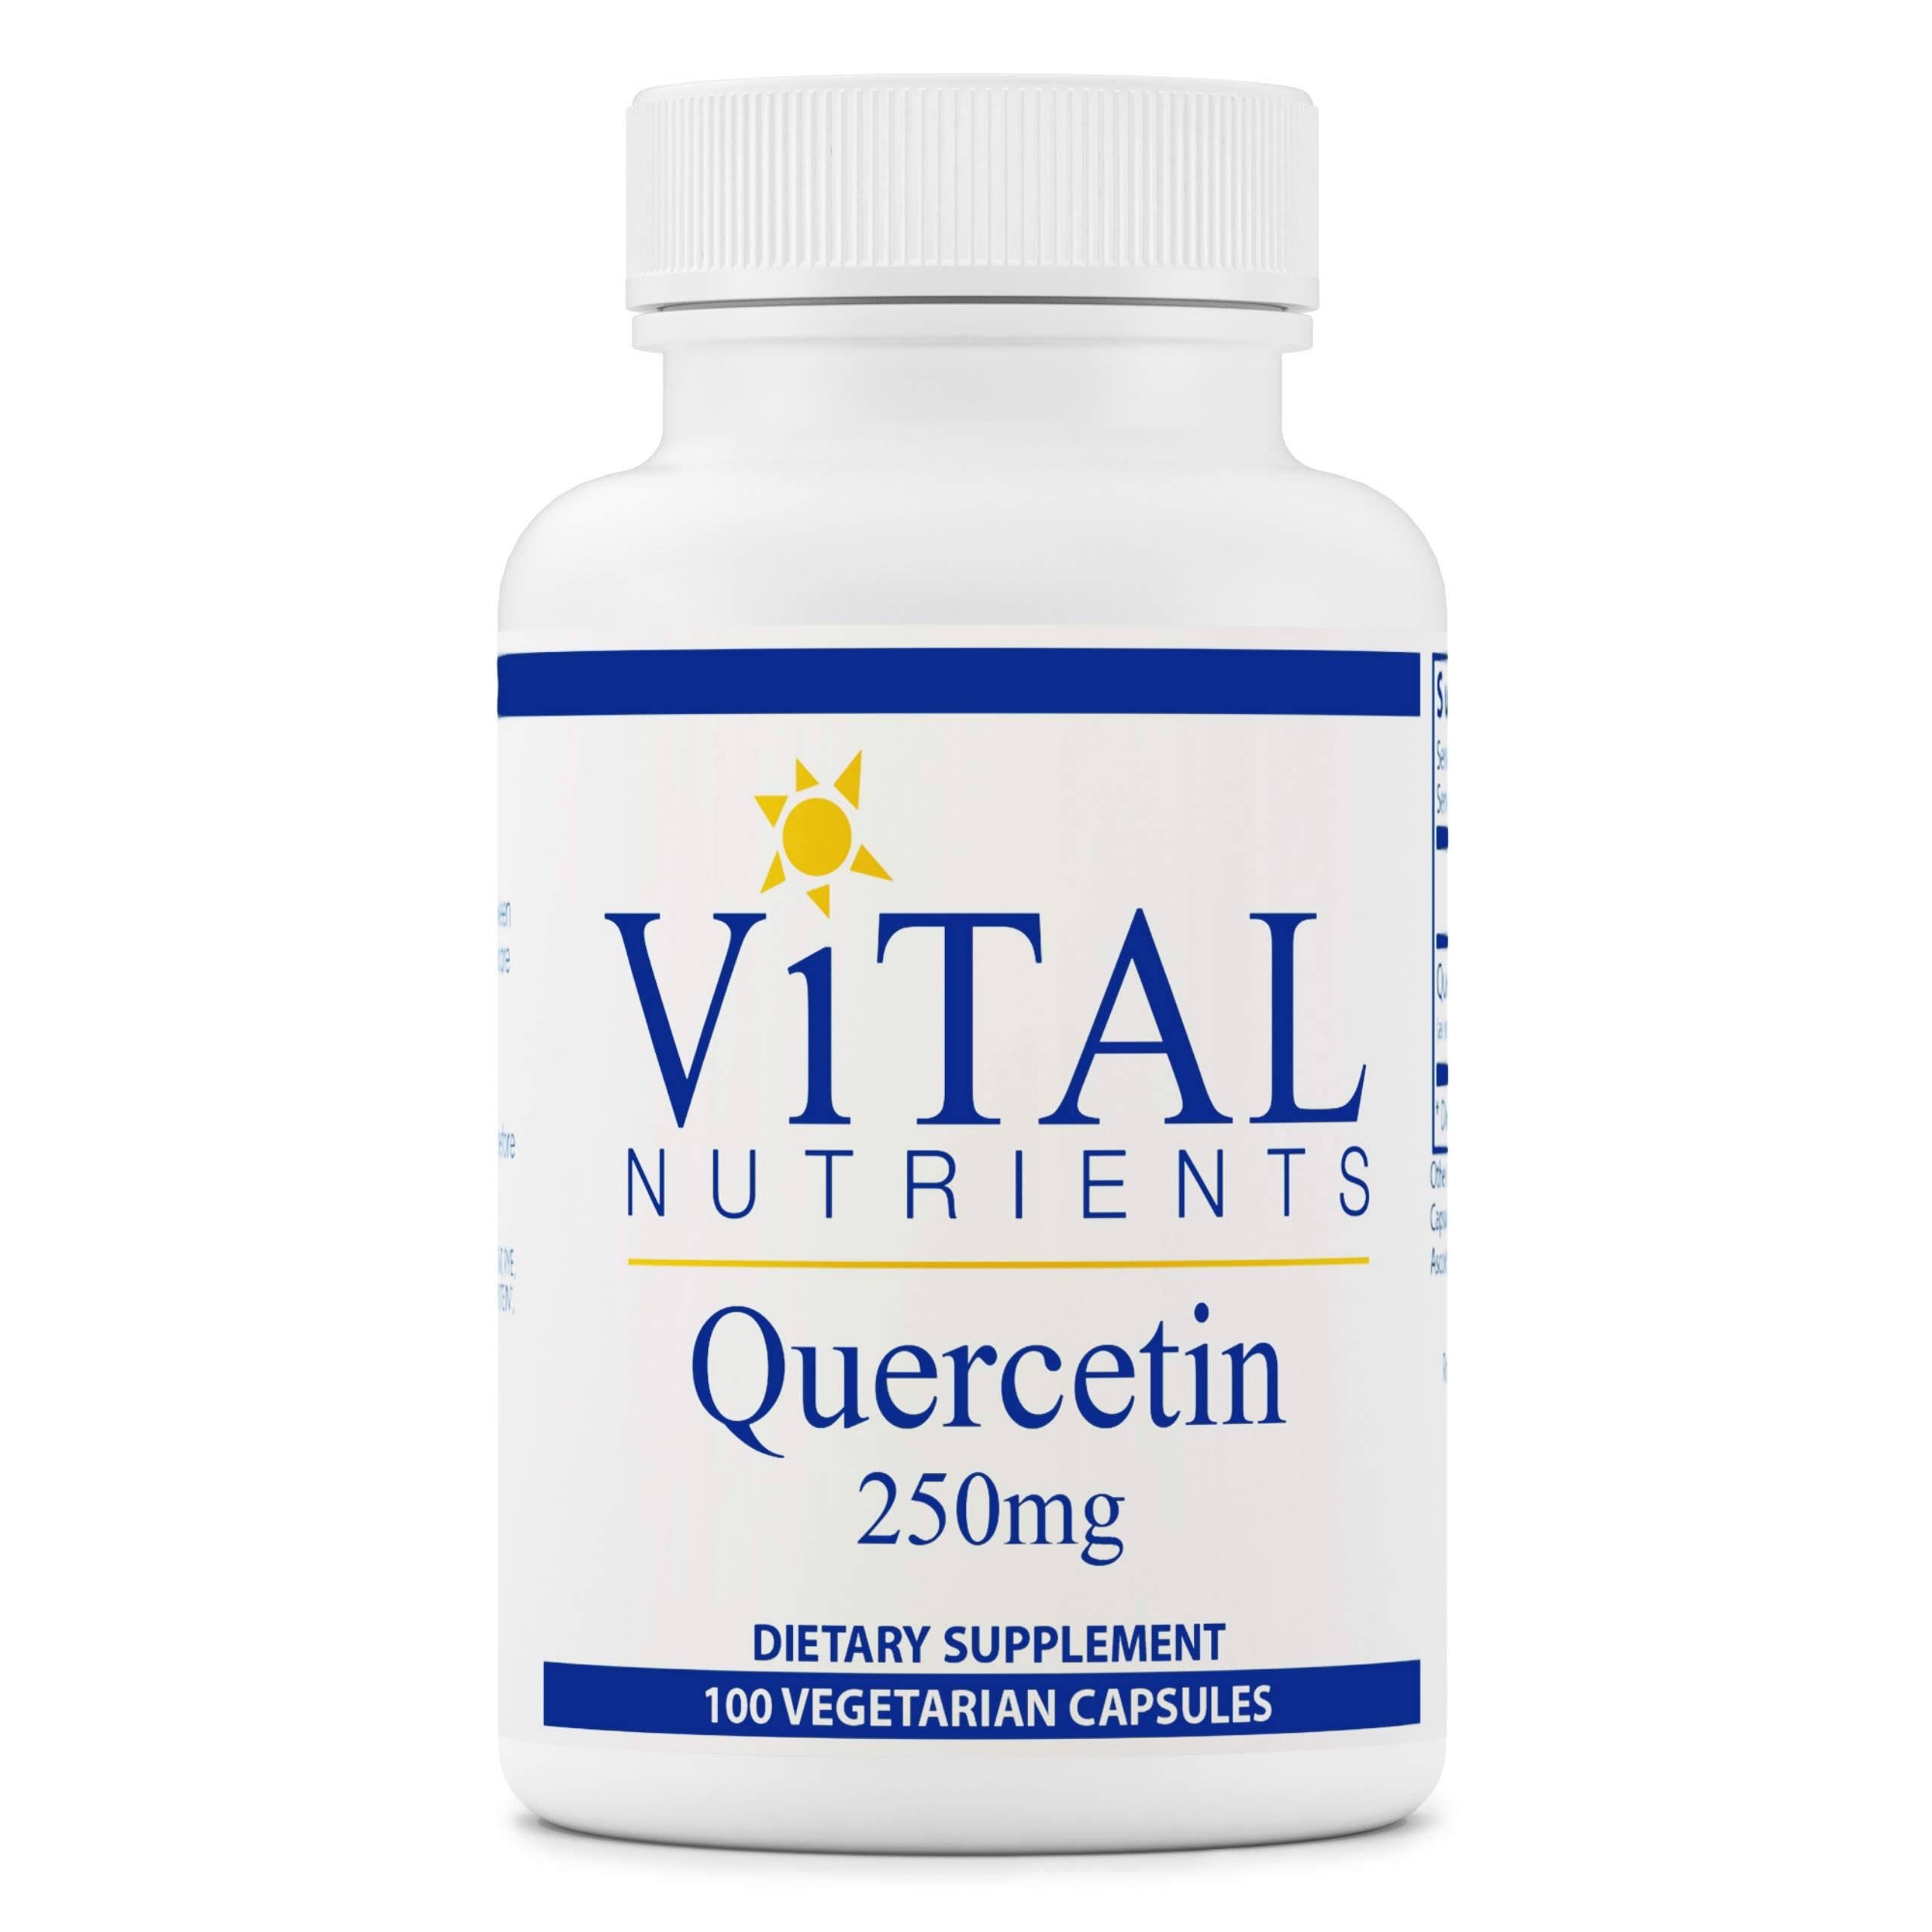 Vital Nutrients Quercetin Supplement - 250mg, 100ct